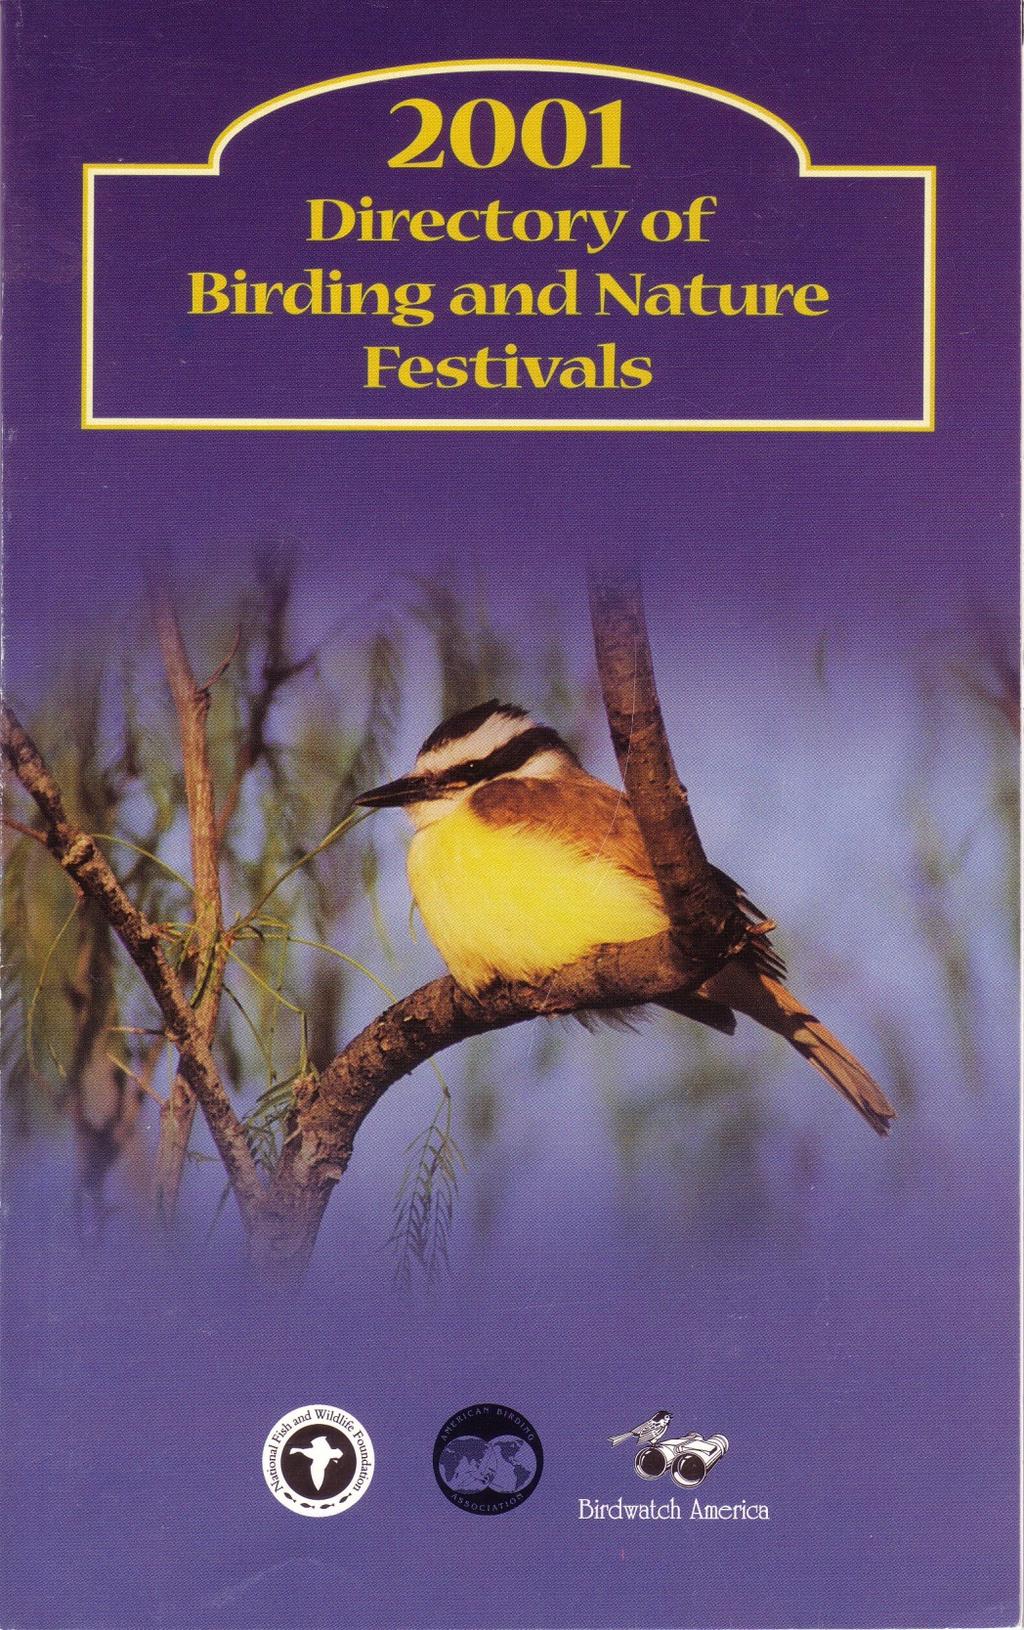 Annual Hummer/Bird Celebration Rockport,